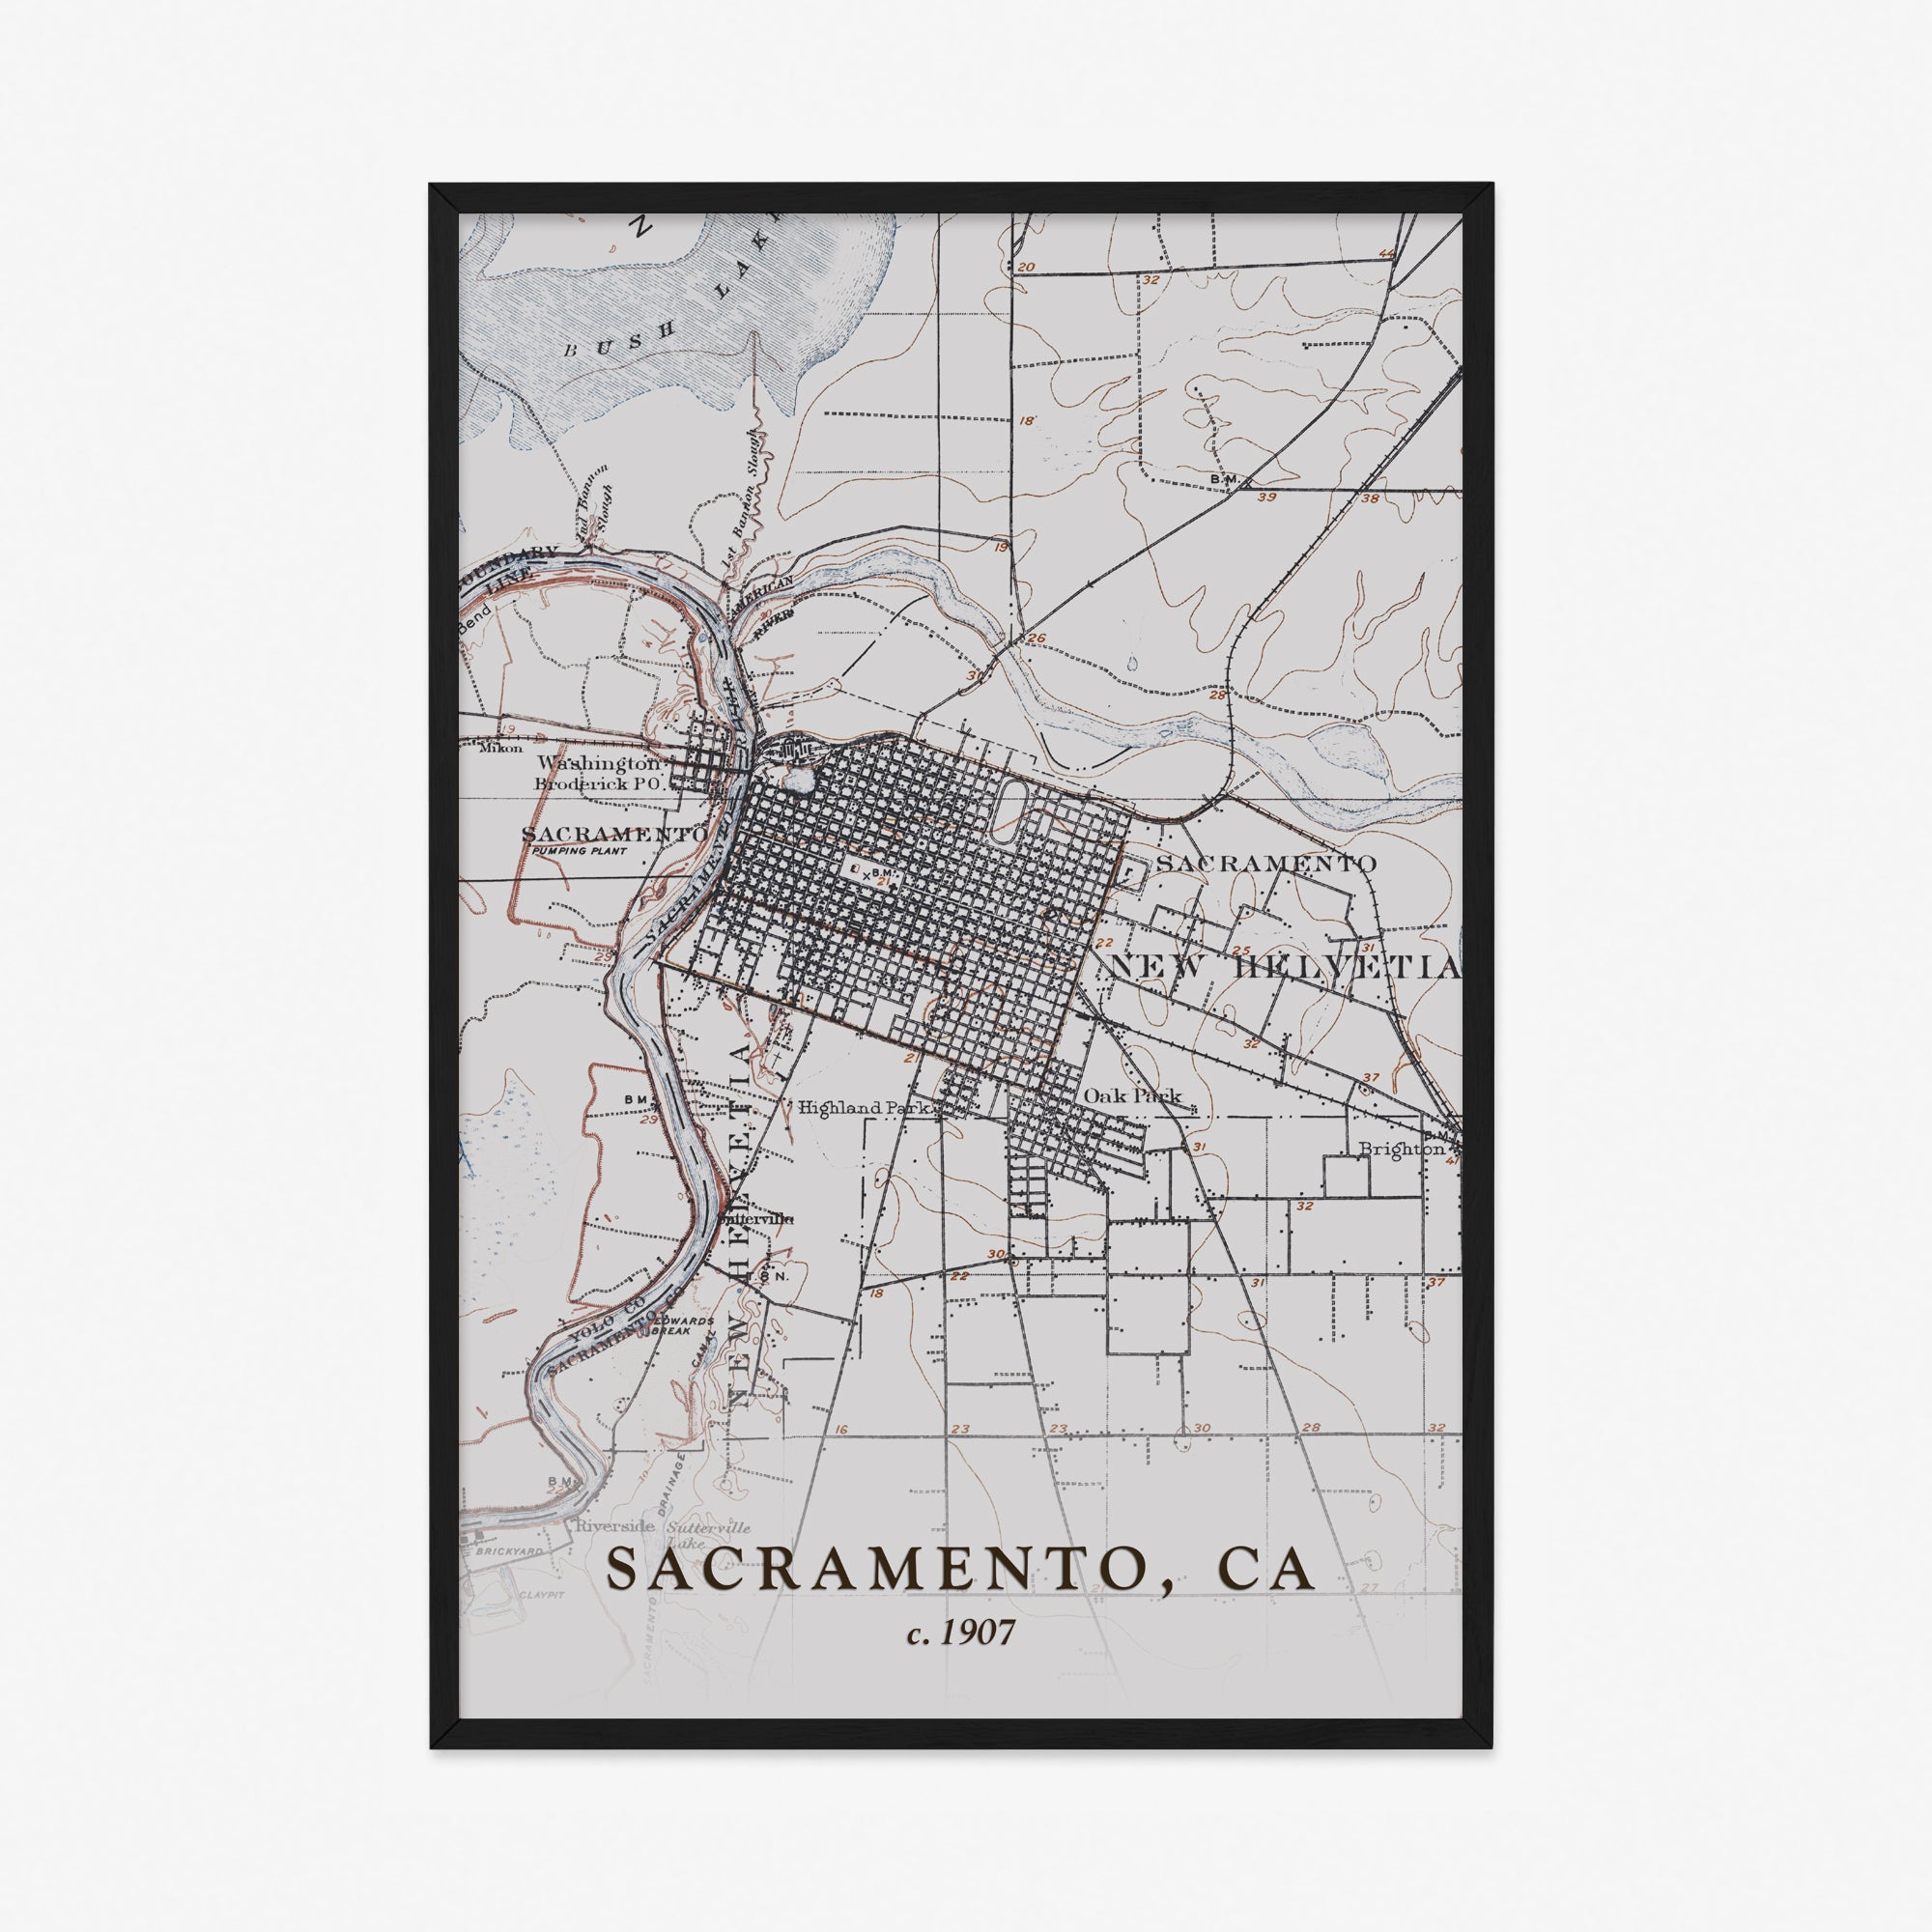 Sacramento, CA - 1907 Topographic Map